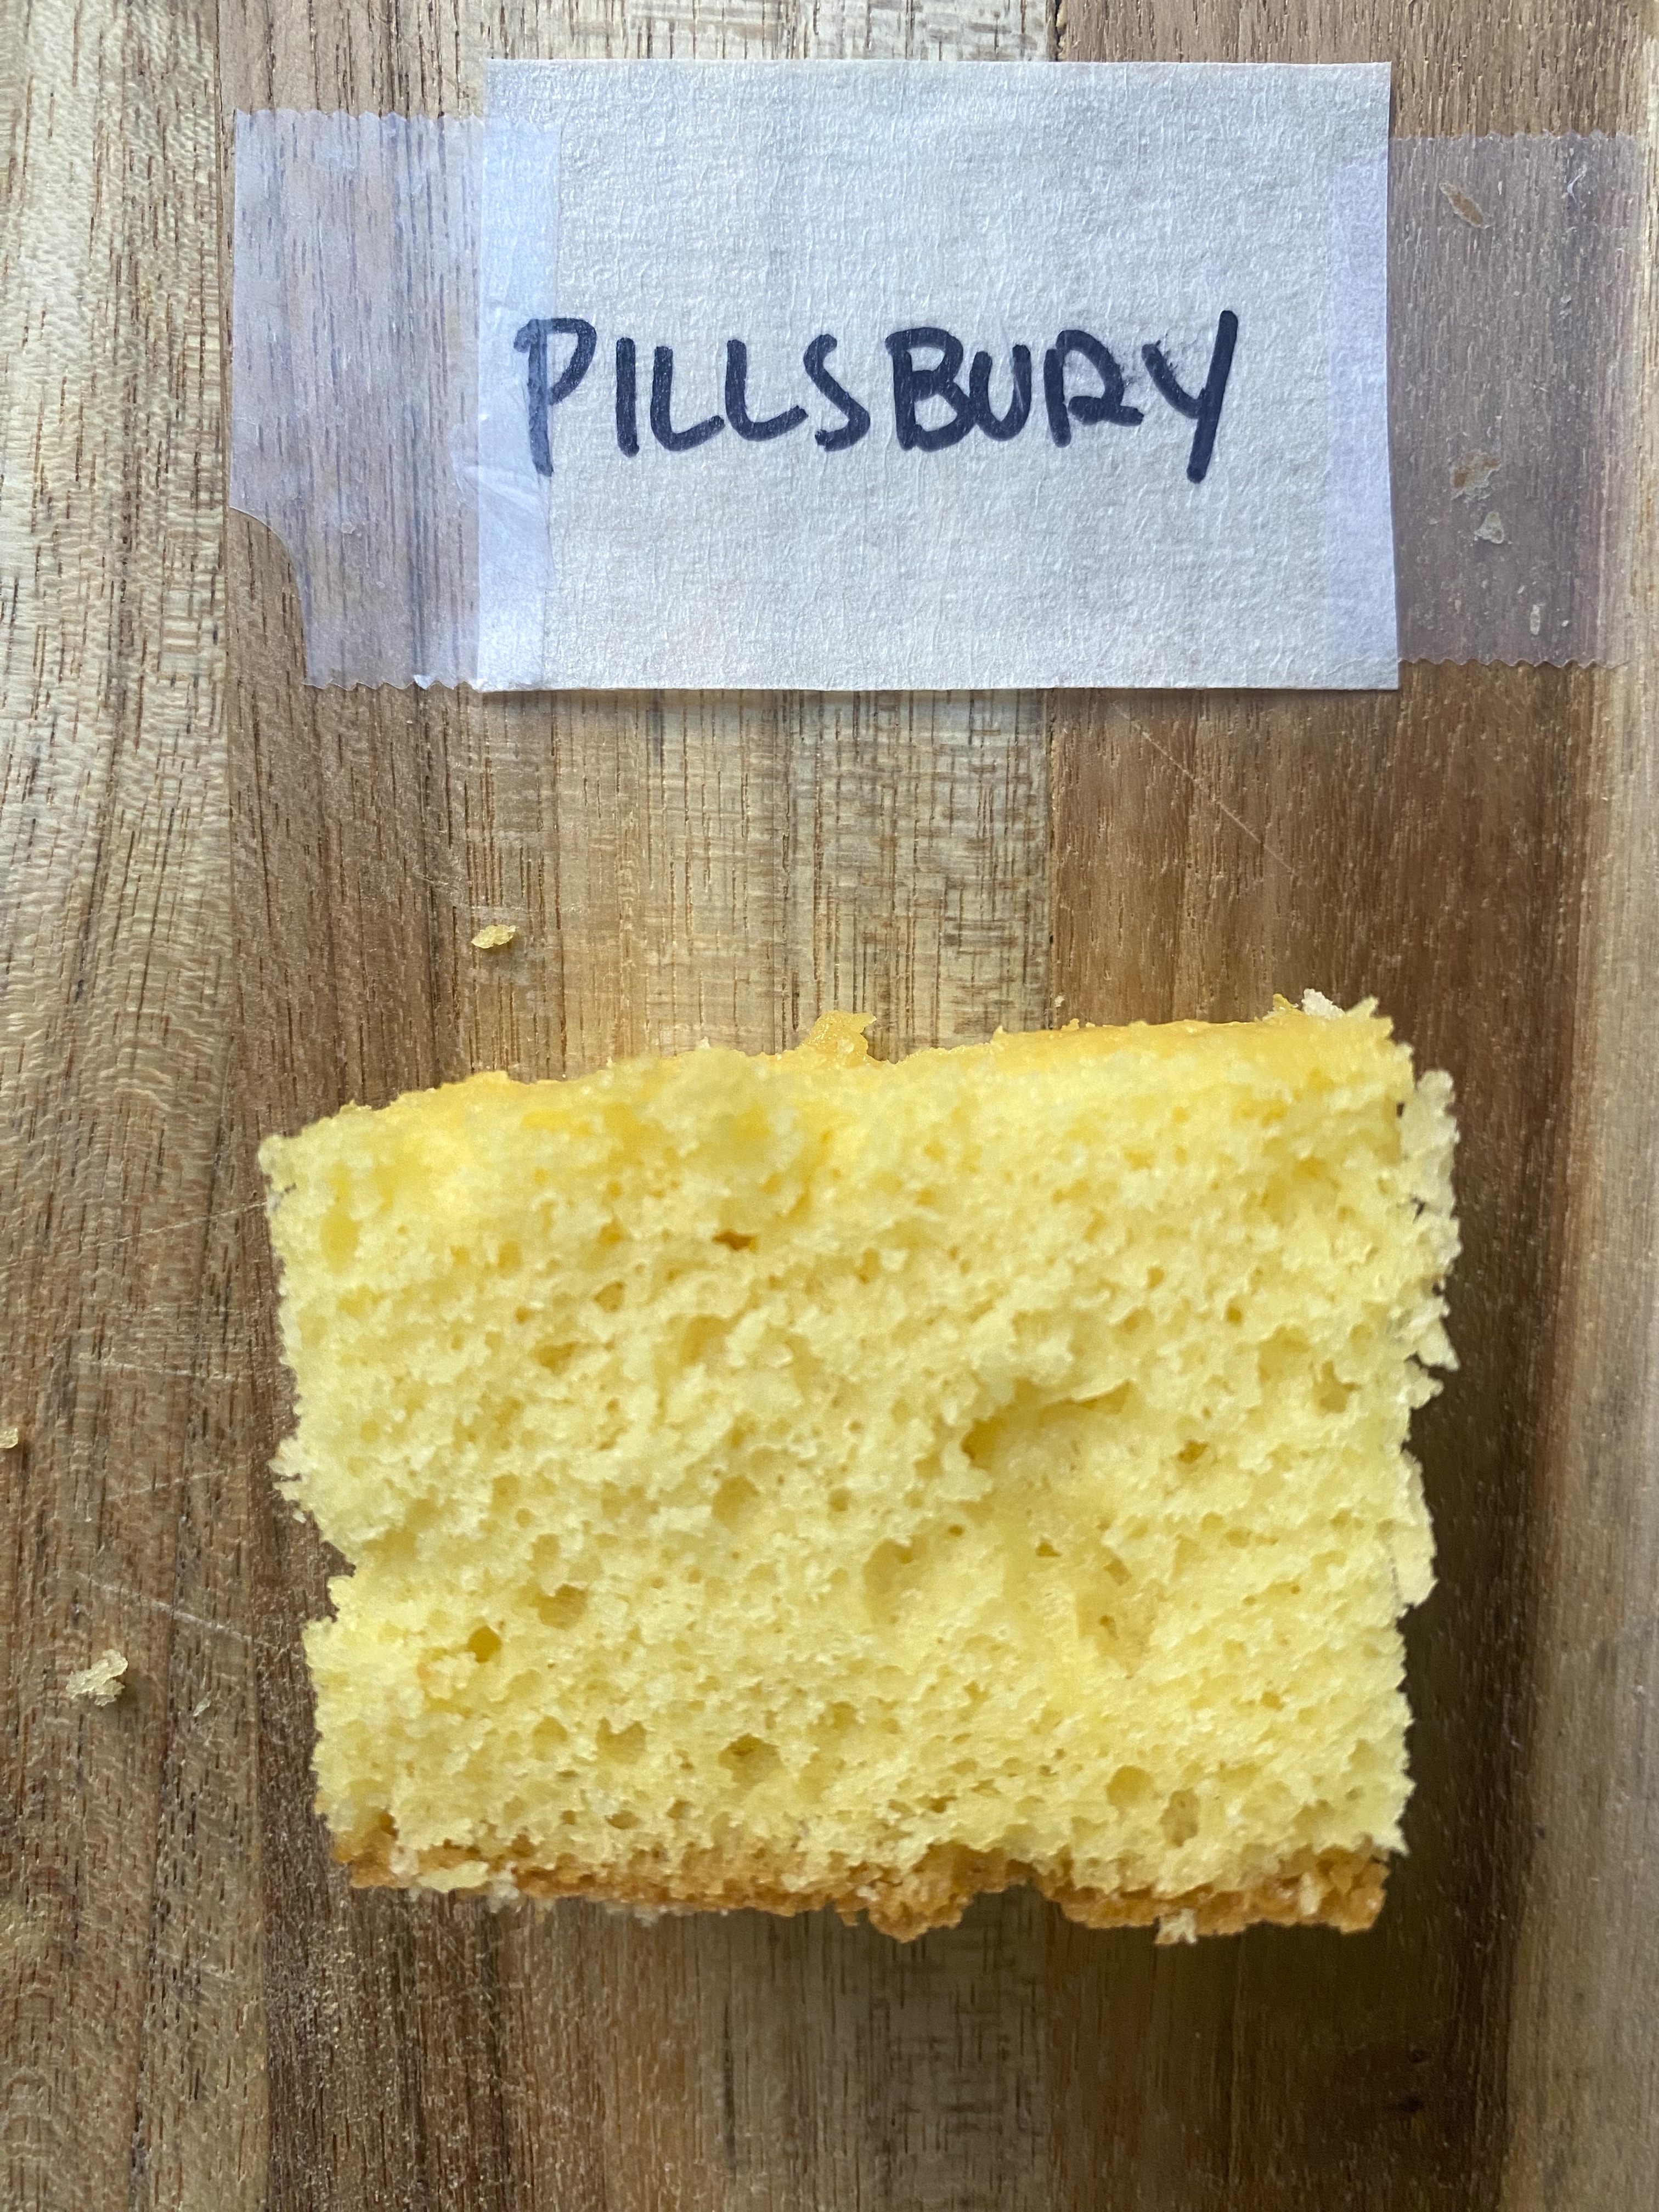 a slice of pillsbury cake